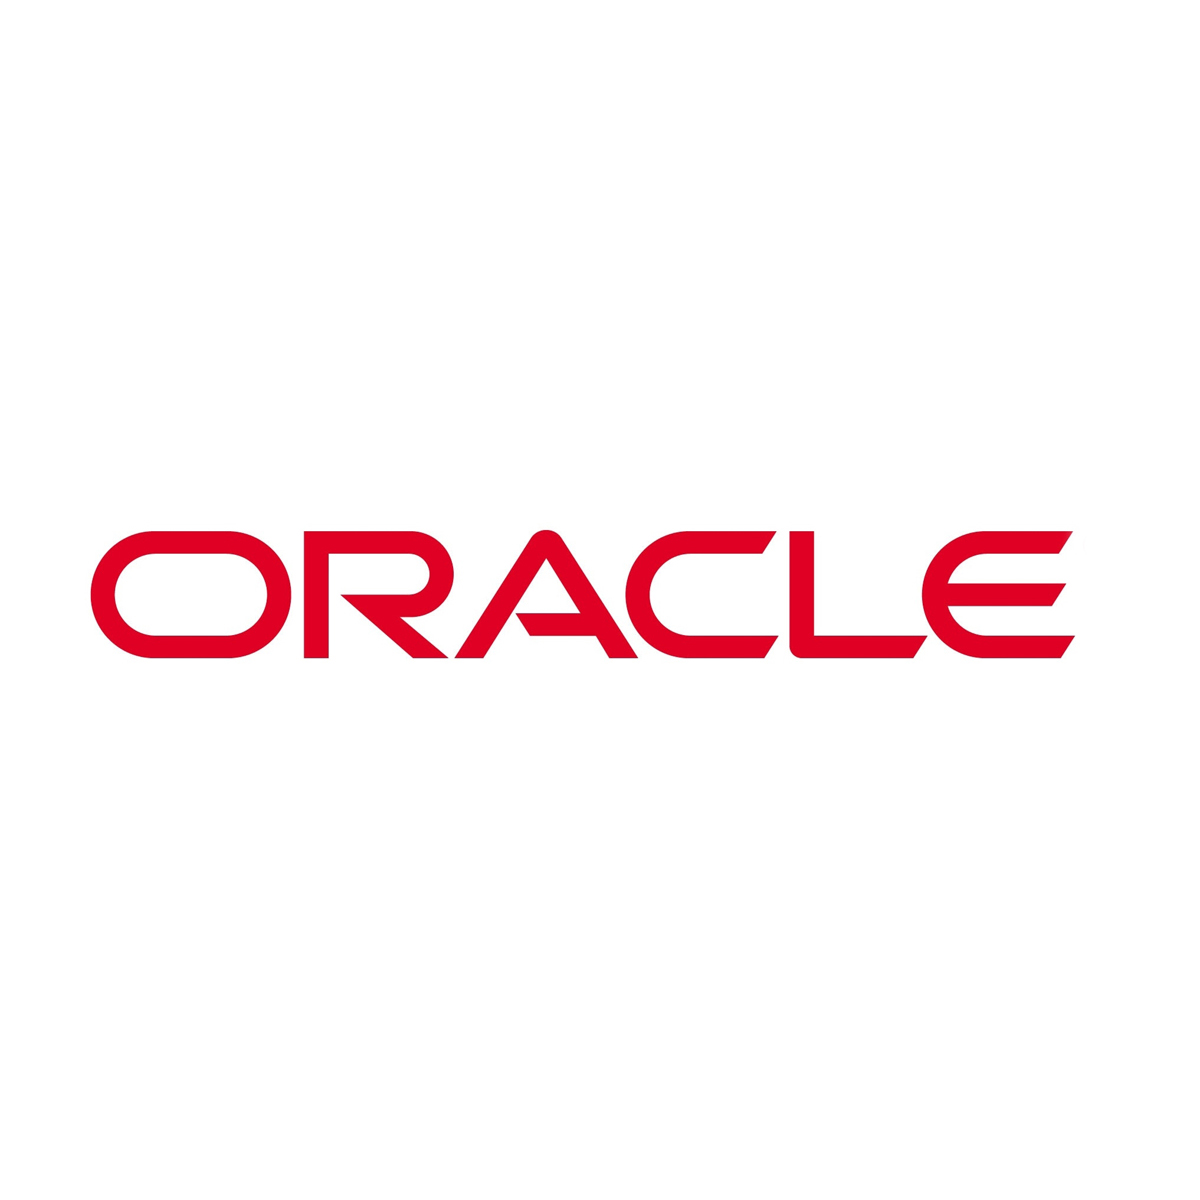  Top Cloud CRM Software Logo: Oracle